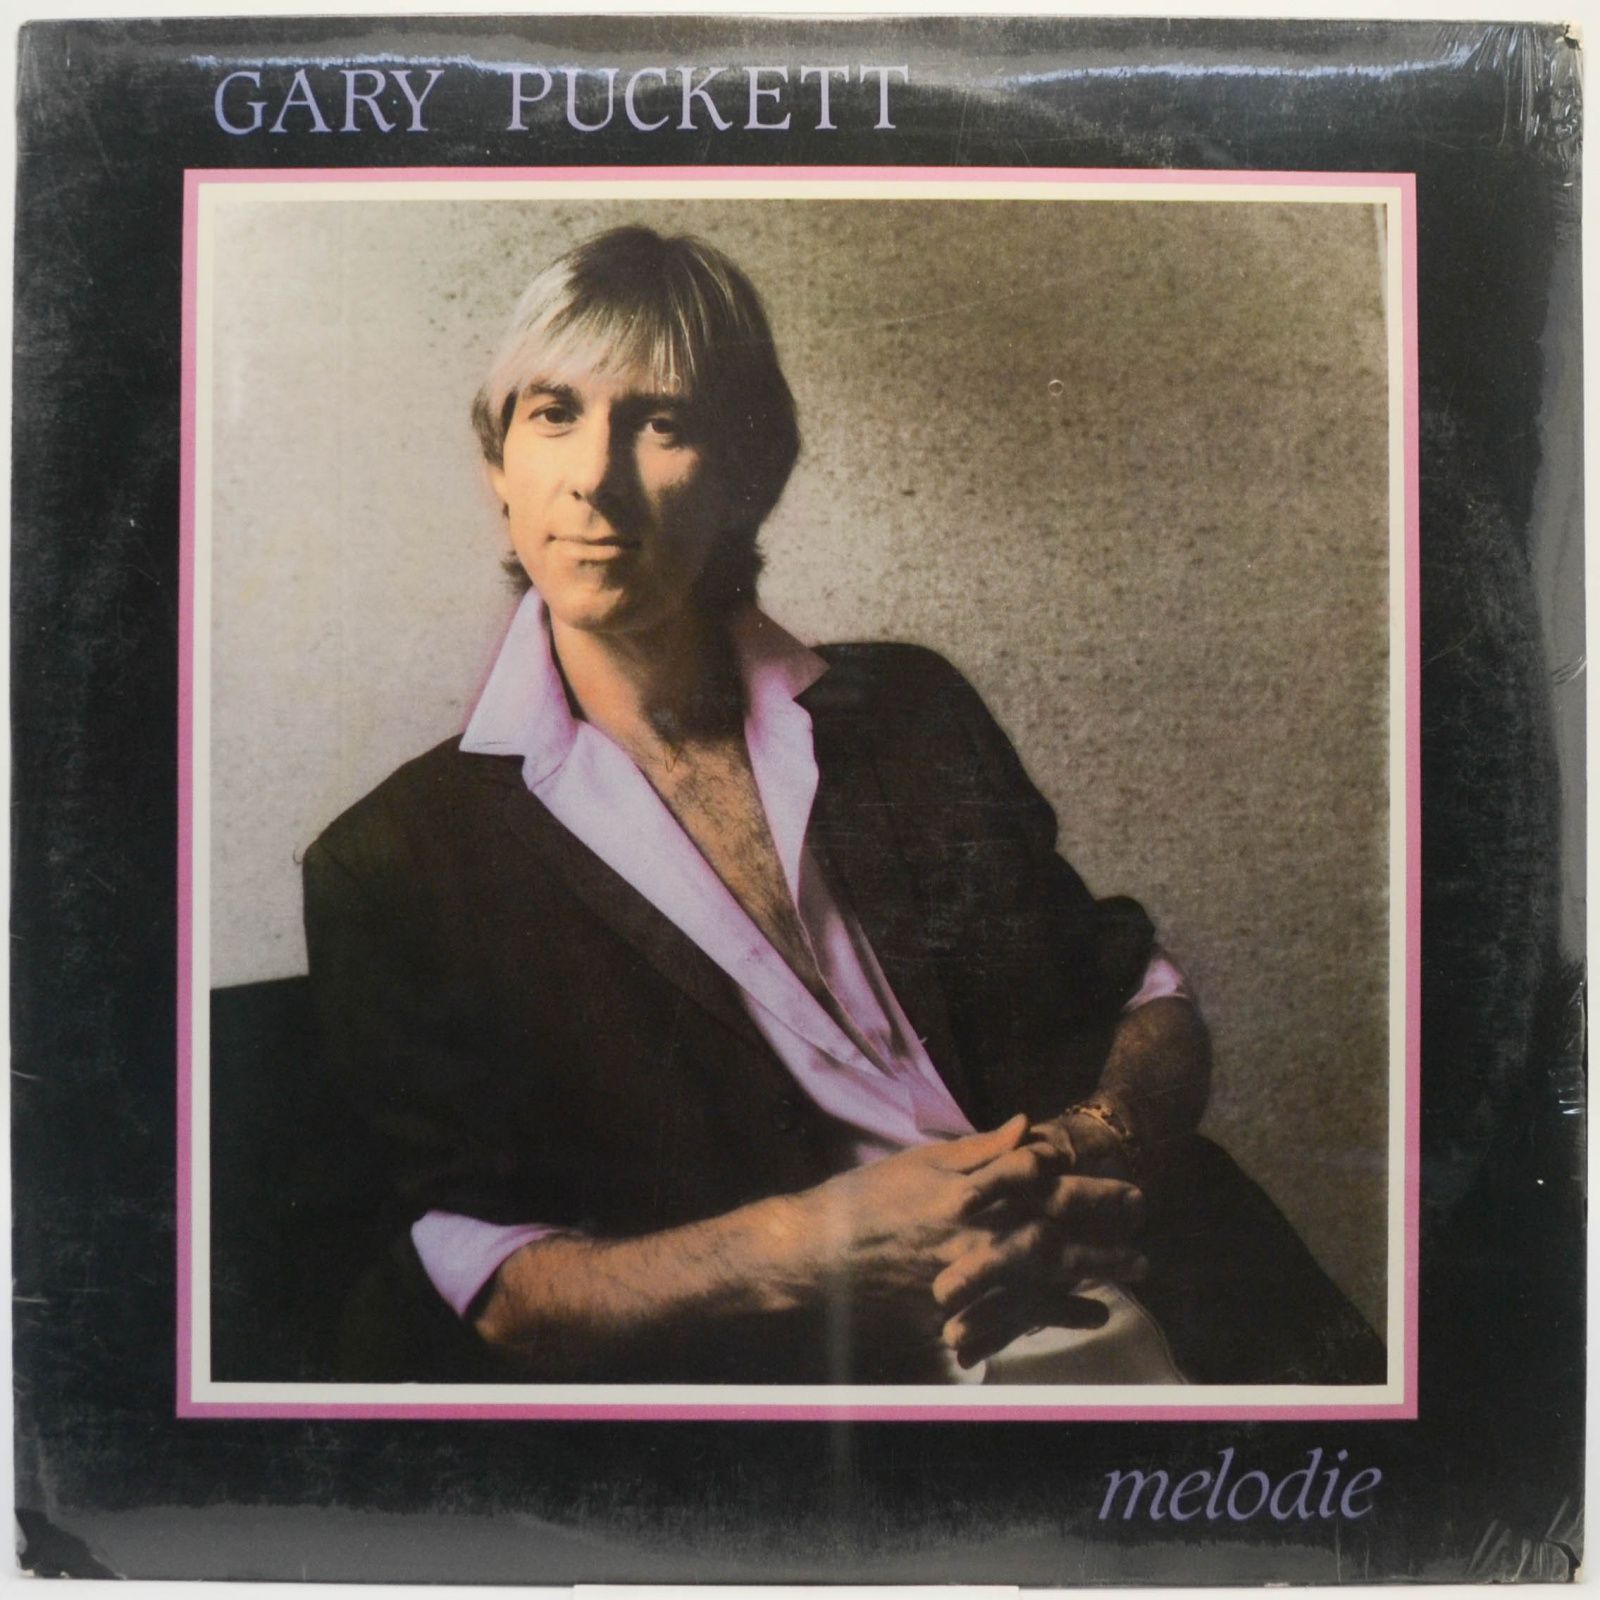 Gary Puckett — Melodie (USA), 1982